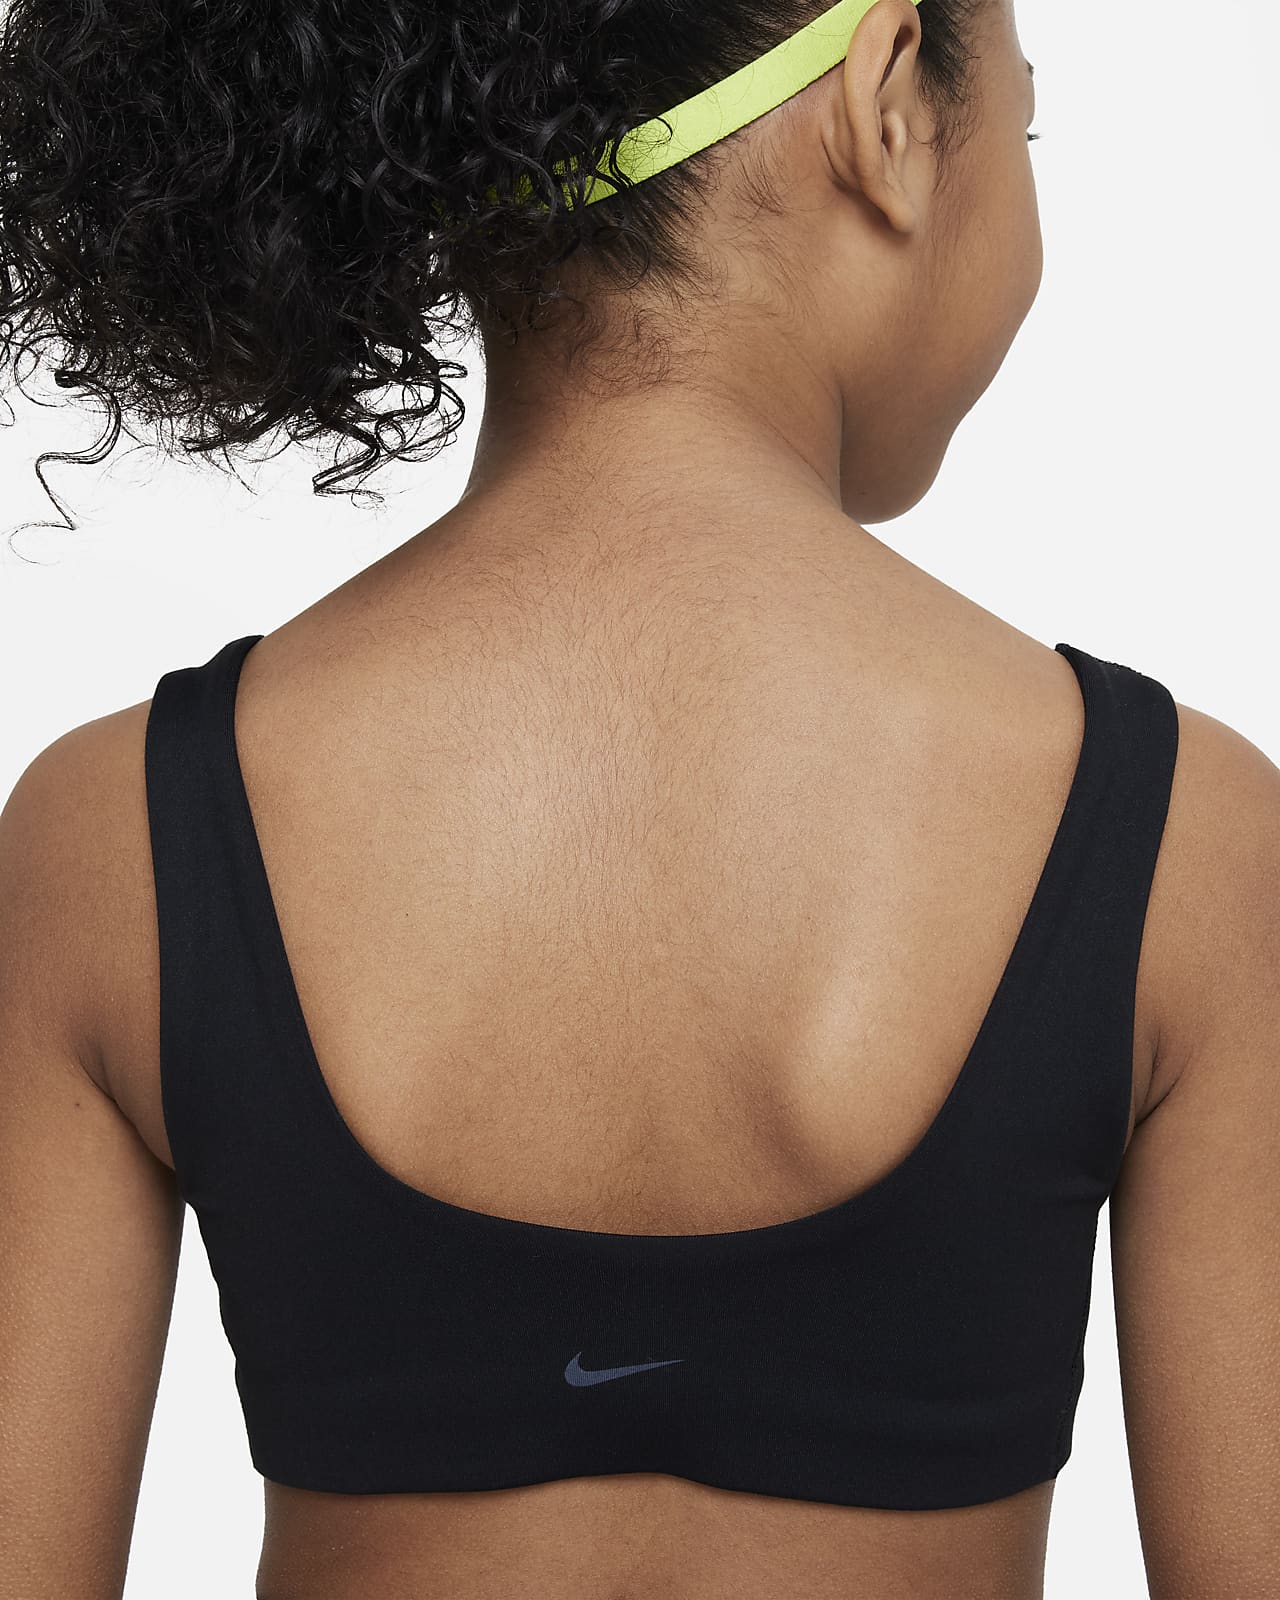 Nike Alate All U Big Kids' (Girls') Dri-FIT Sports Bra in Pink